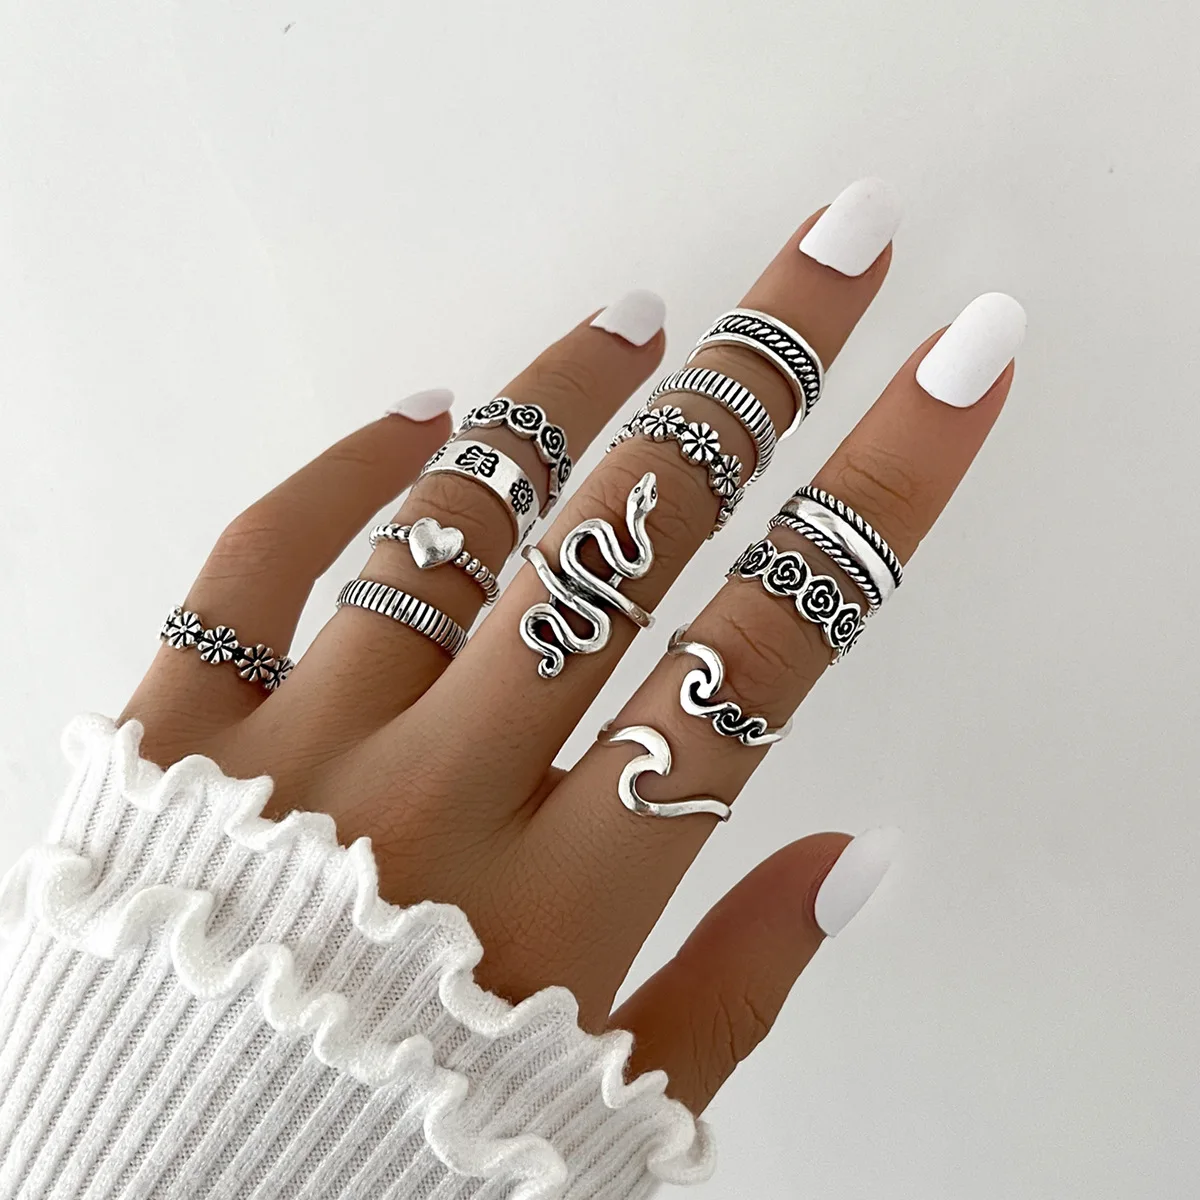 13 Pcs/ Set New Fashion Silver Snake-shaped Ring for Women Boho Flower Geometric Rings Set Party Trend Punk Rock Jewelry Gift